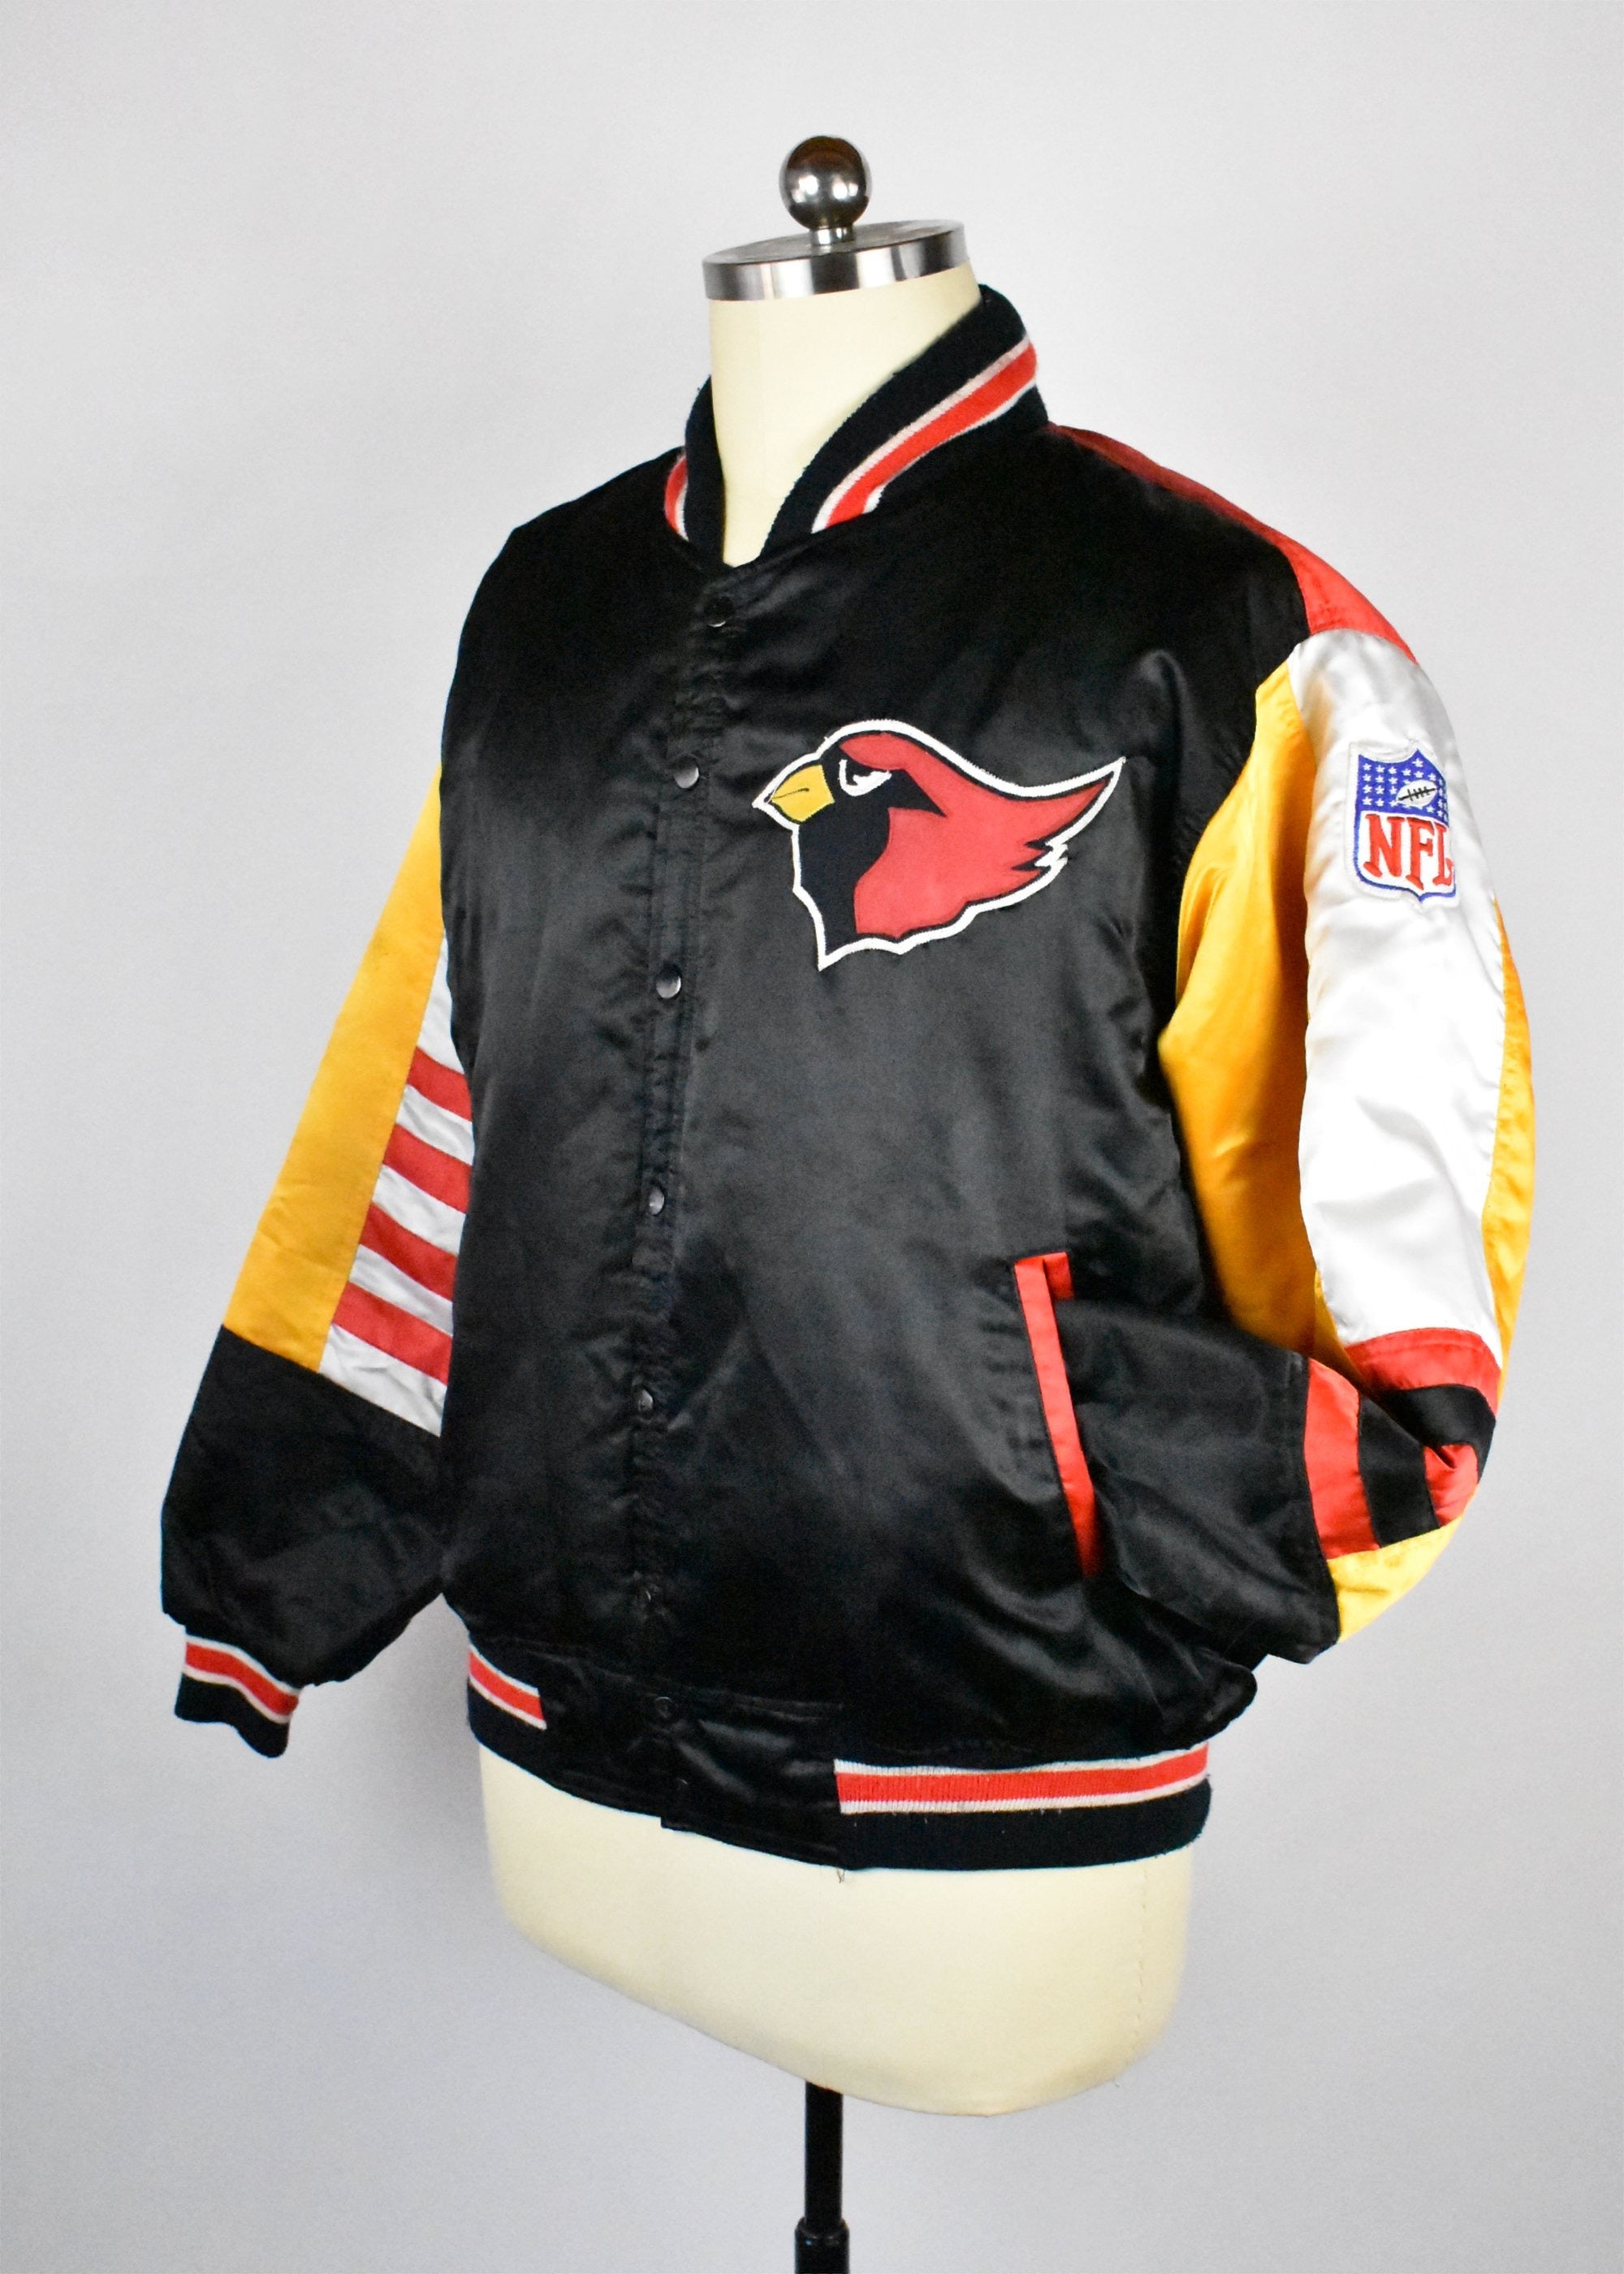 90's Louisville Cardinals Red Satin Jacket